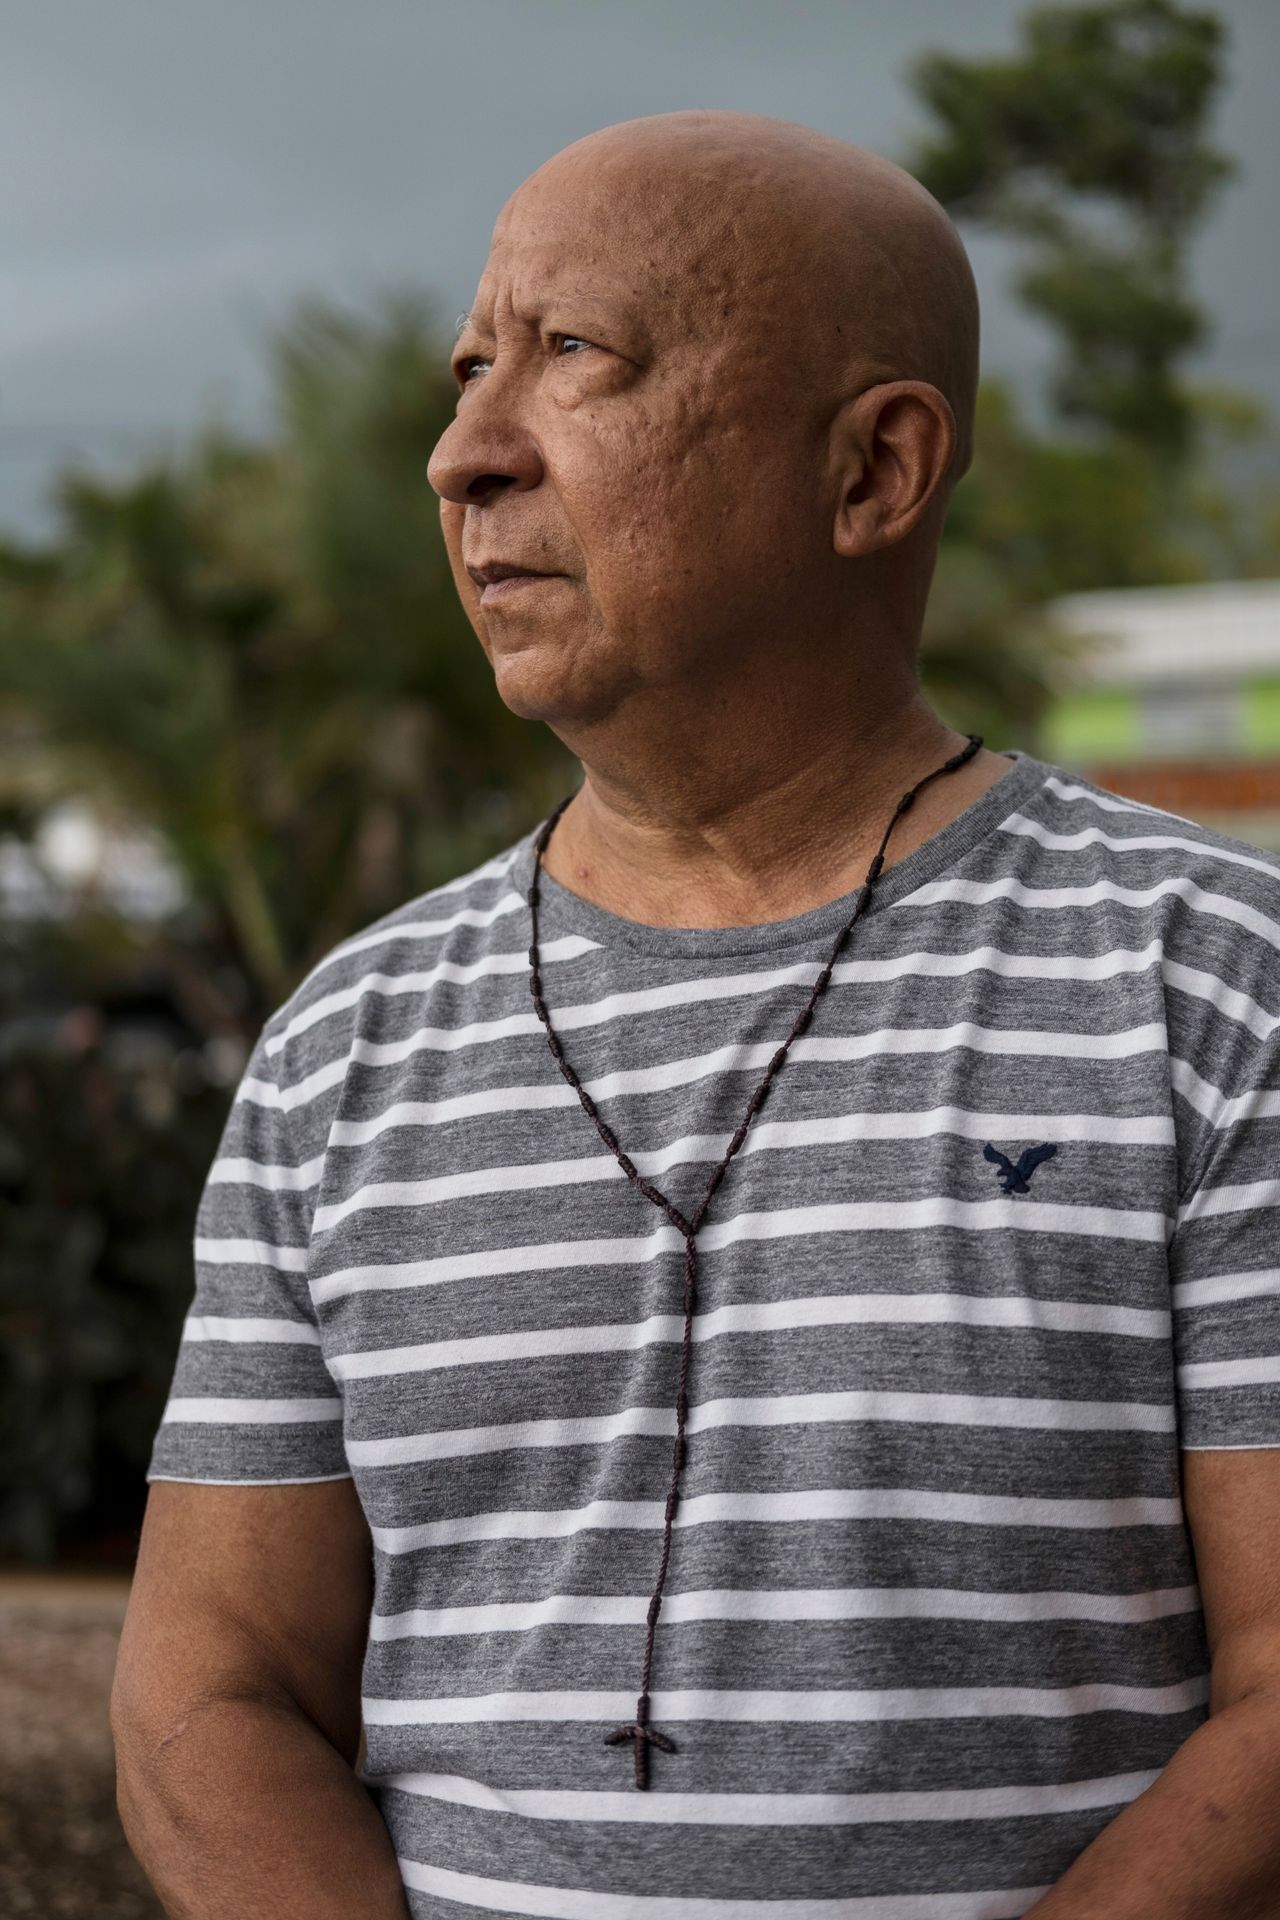 Manases Vega, 65, a retired high school art teacher, poses for a portrait in Salinas.